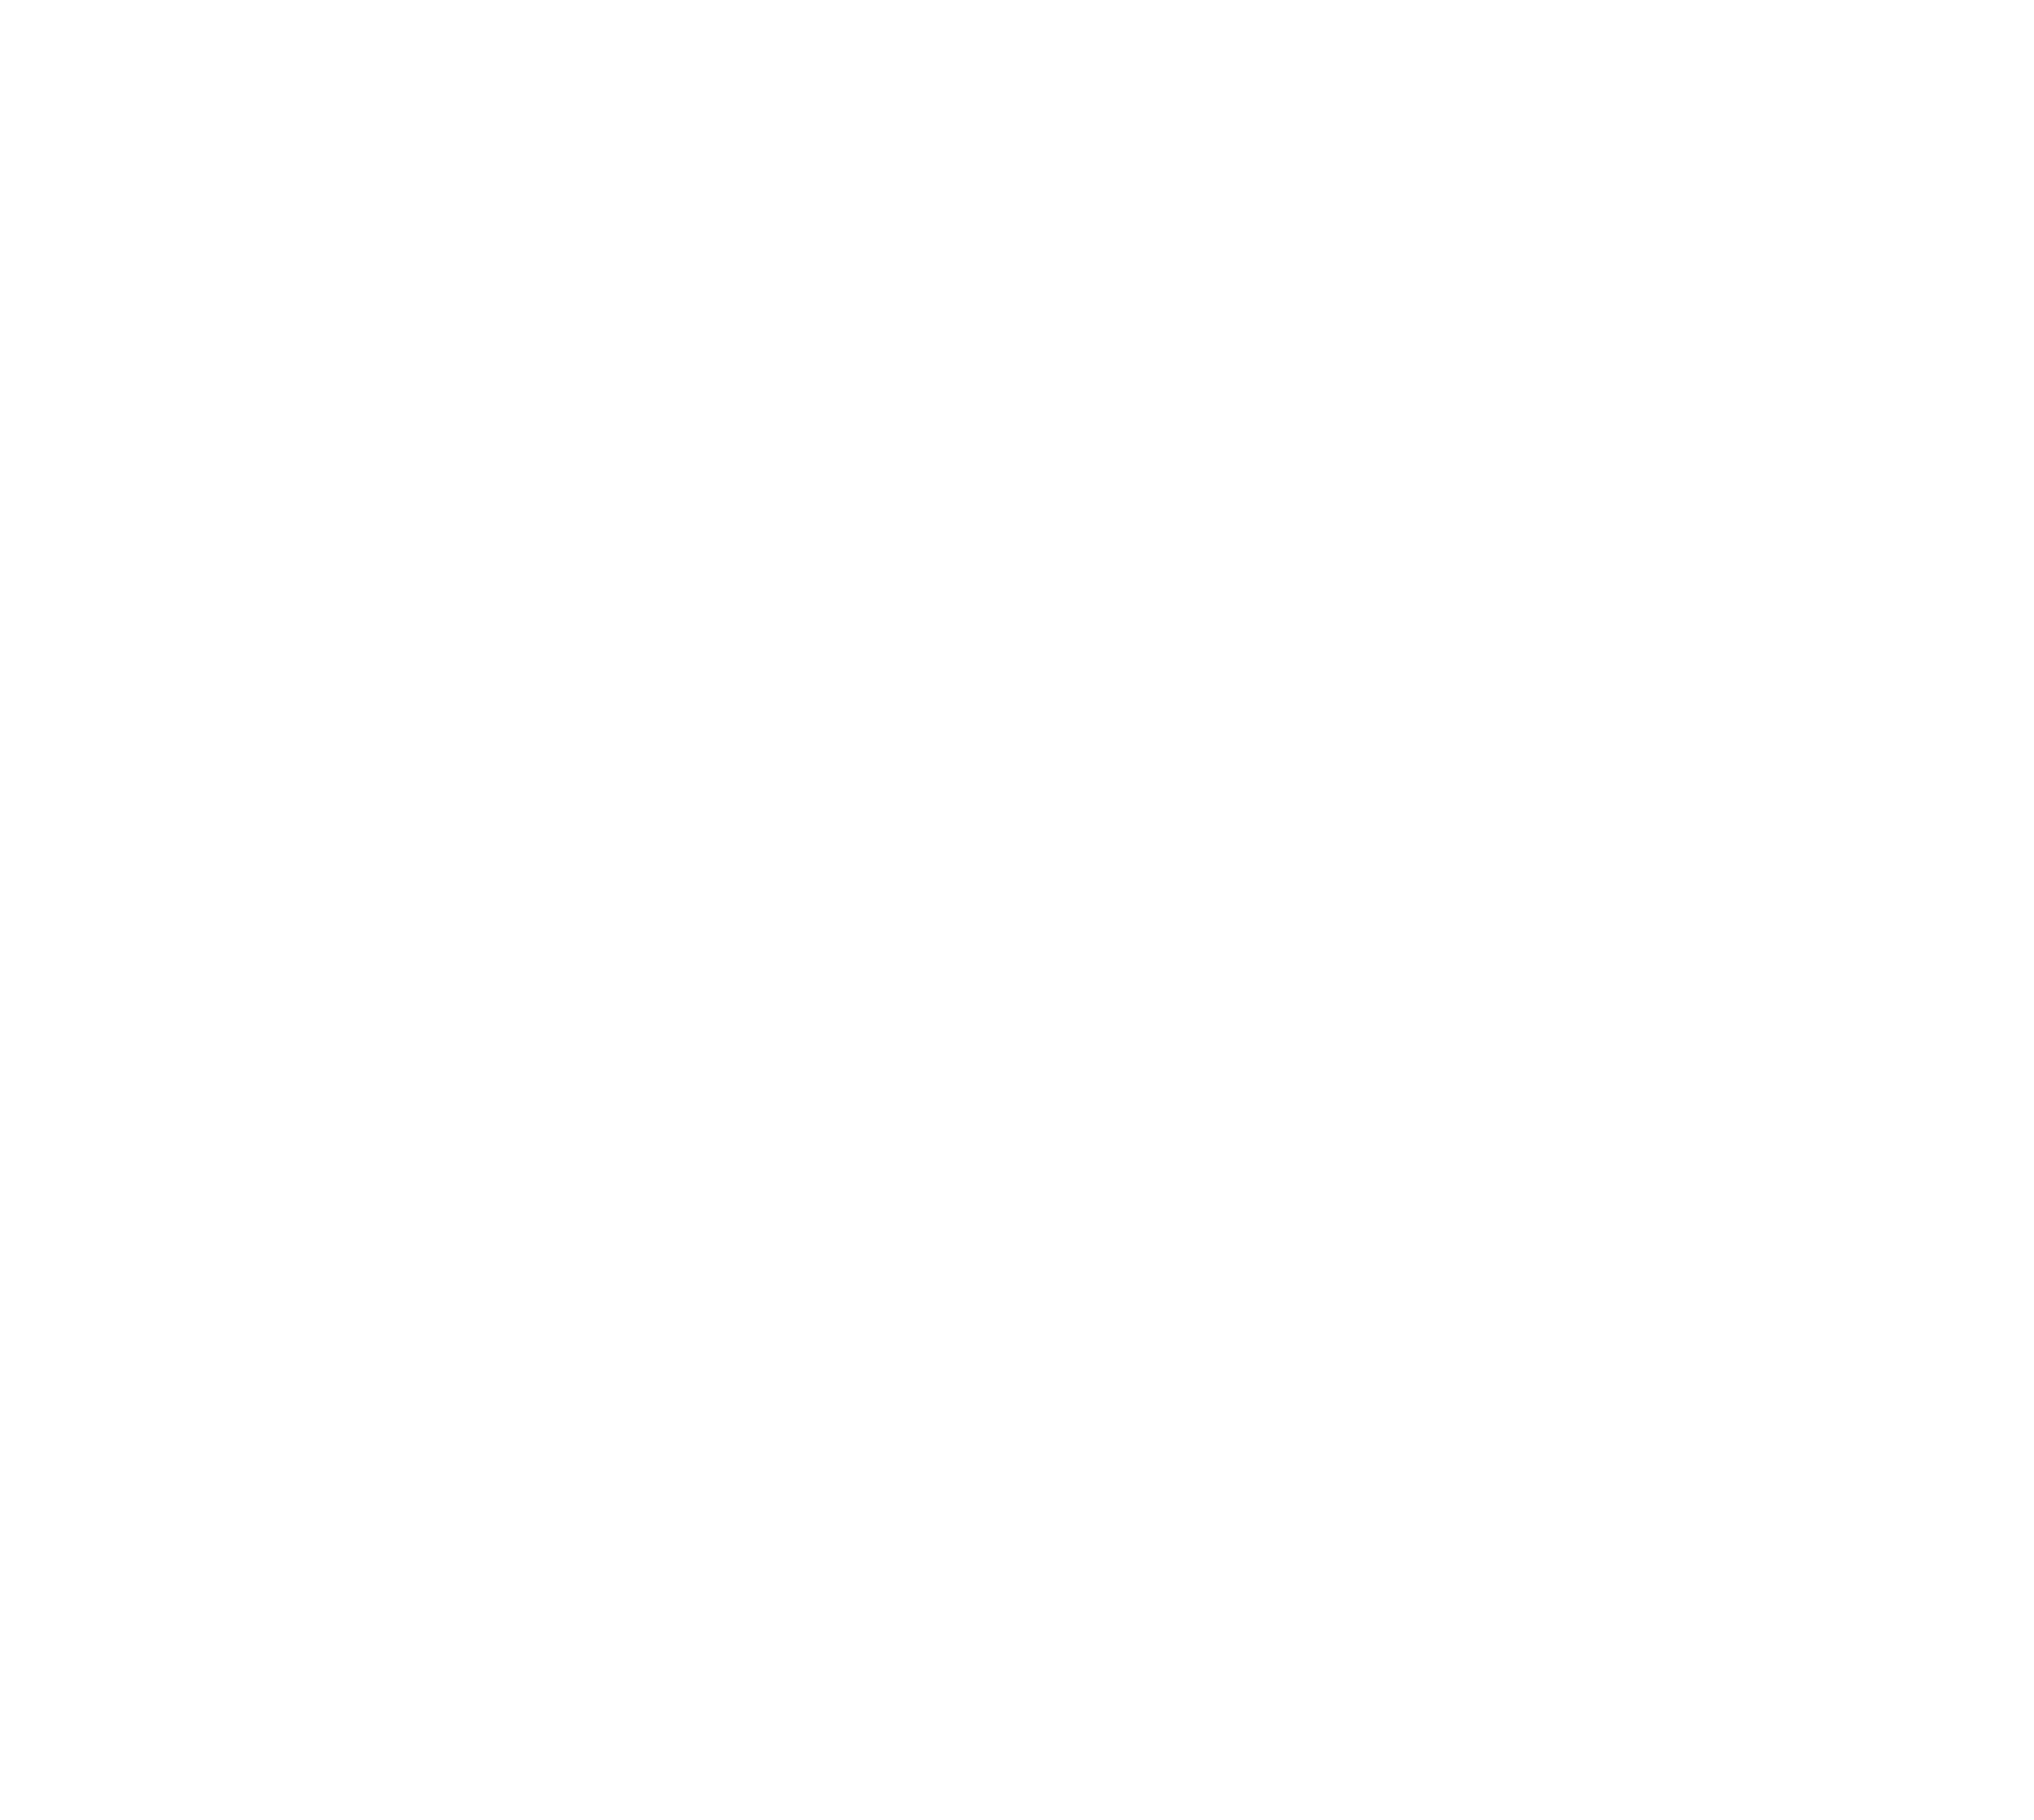 University of Seville logo